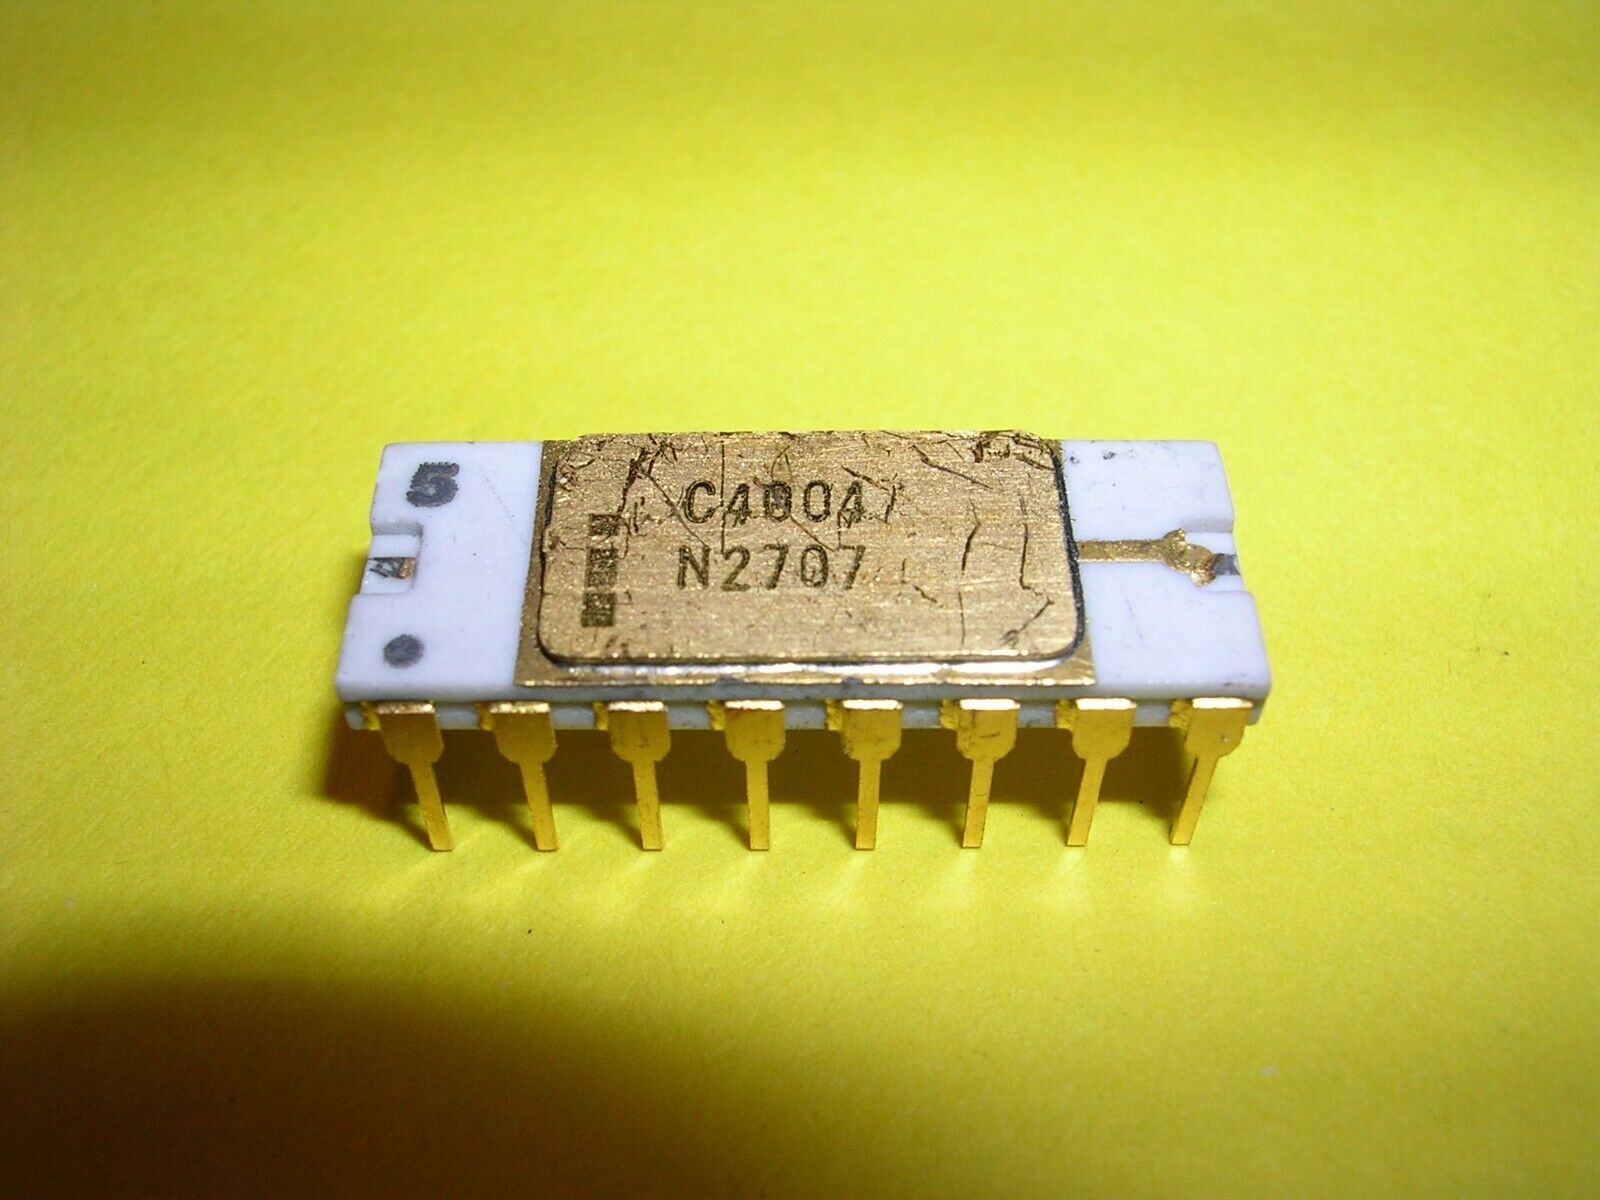 Intel C4004 in White Ceramic Package - World\'s First Microprocessor - Ex. Rare